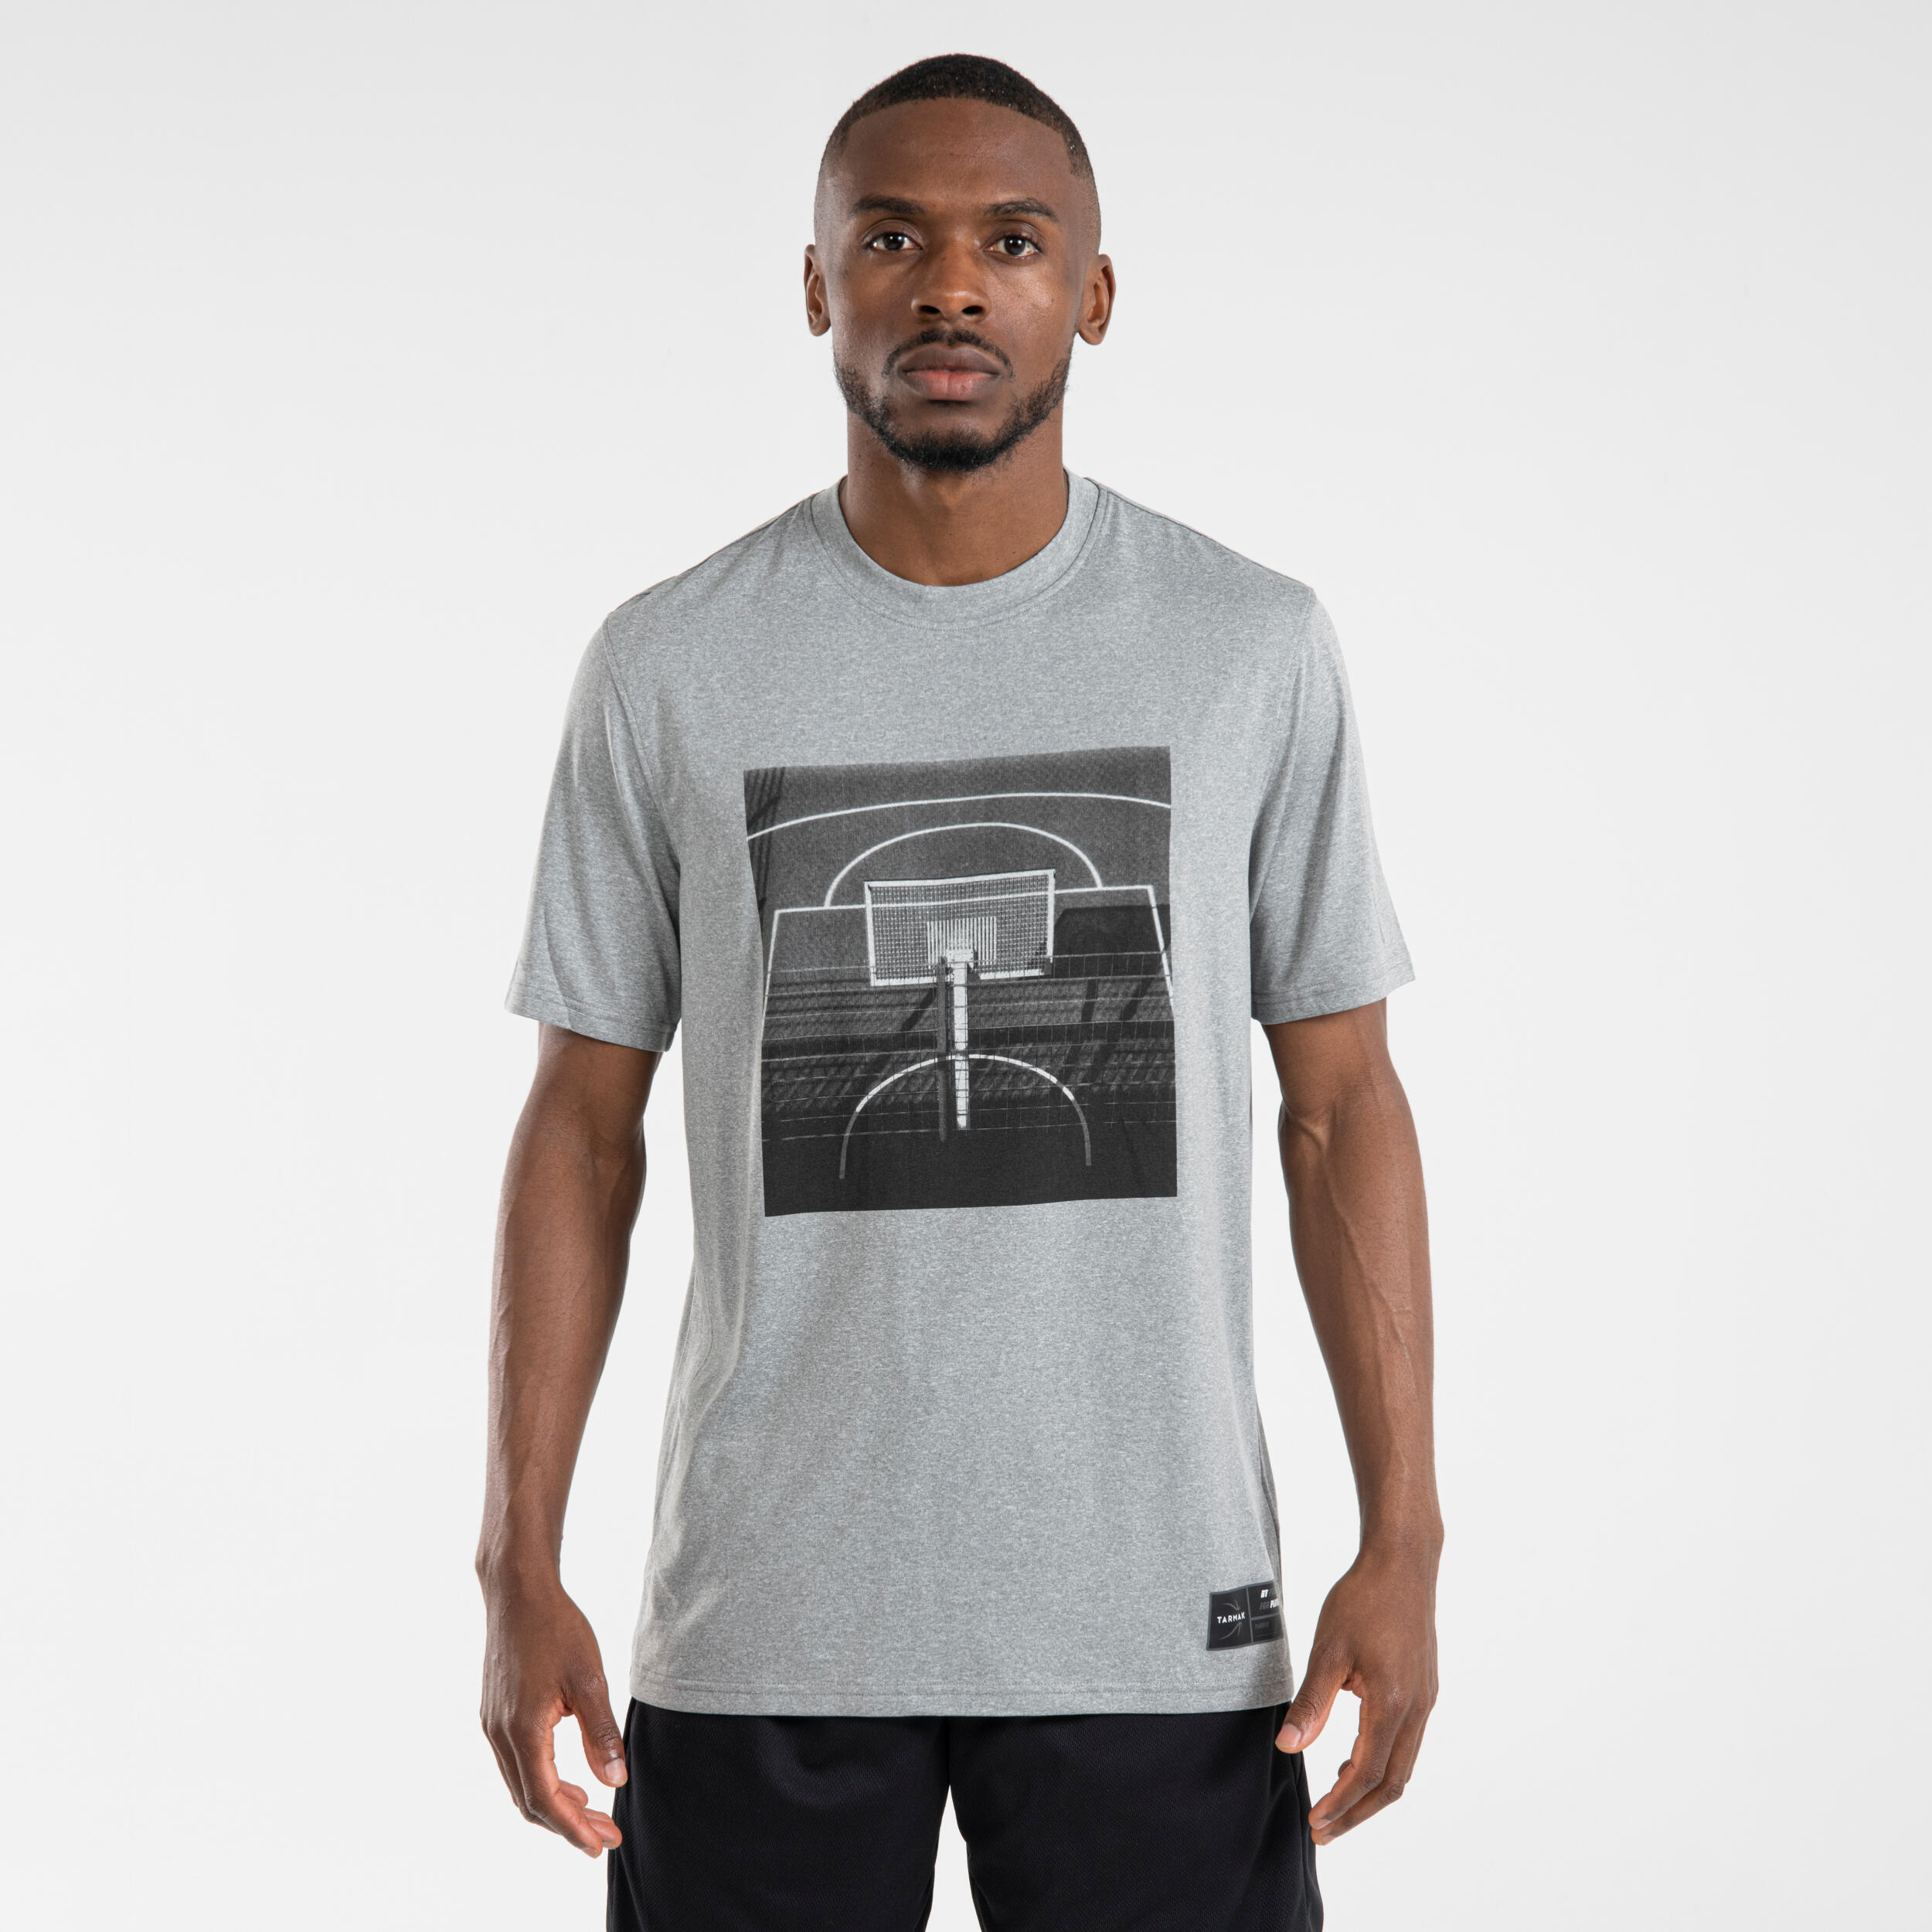 TARMAK Men's/Women's Basketball T-Shirt/Jersey TS500 Fast - Grey